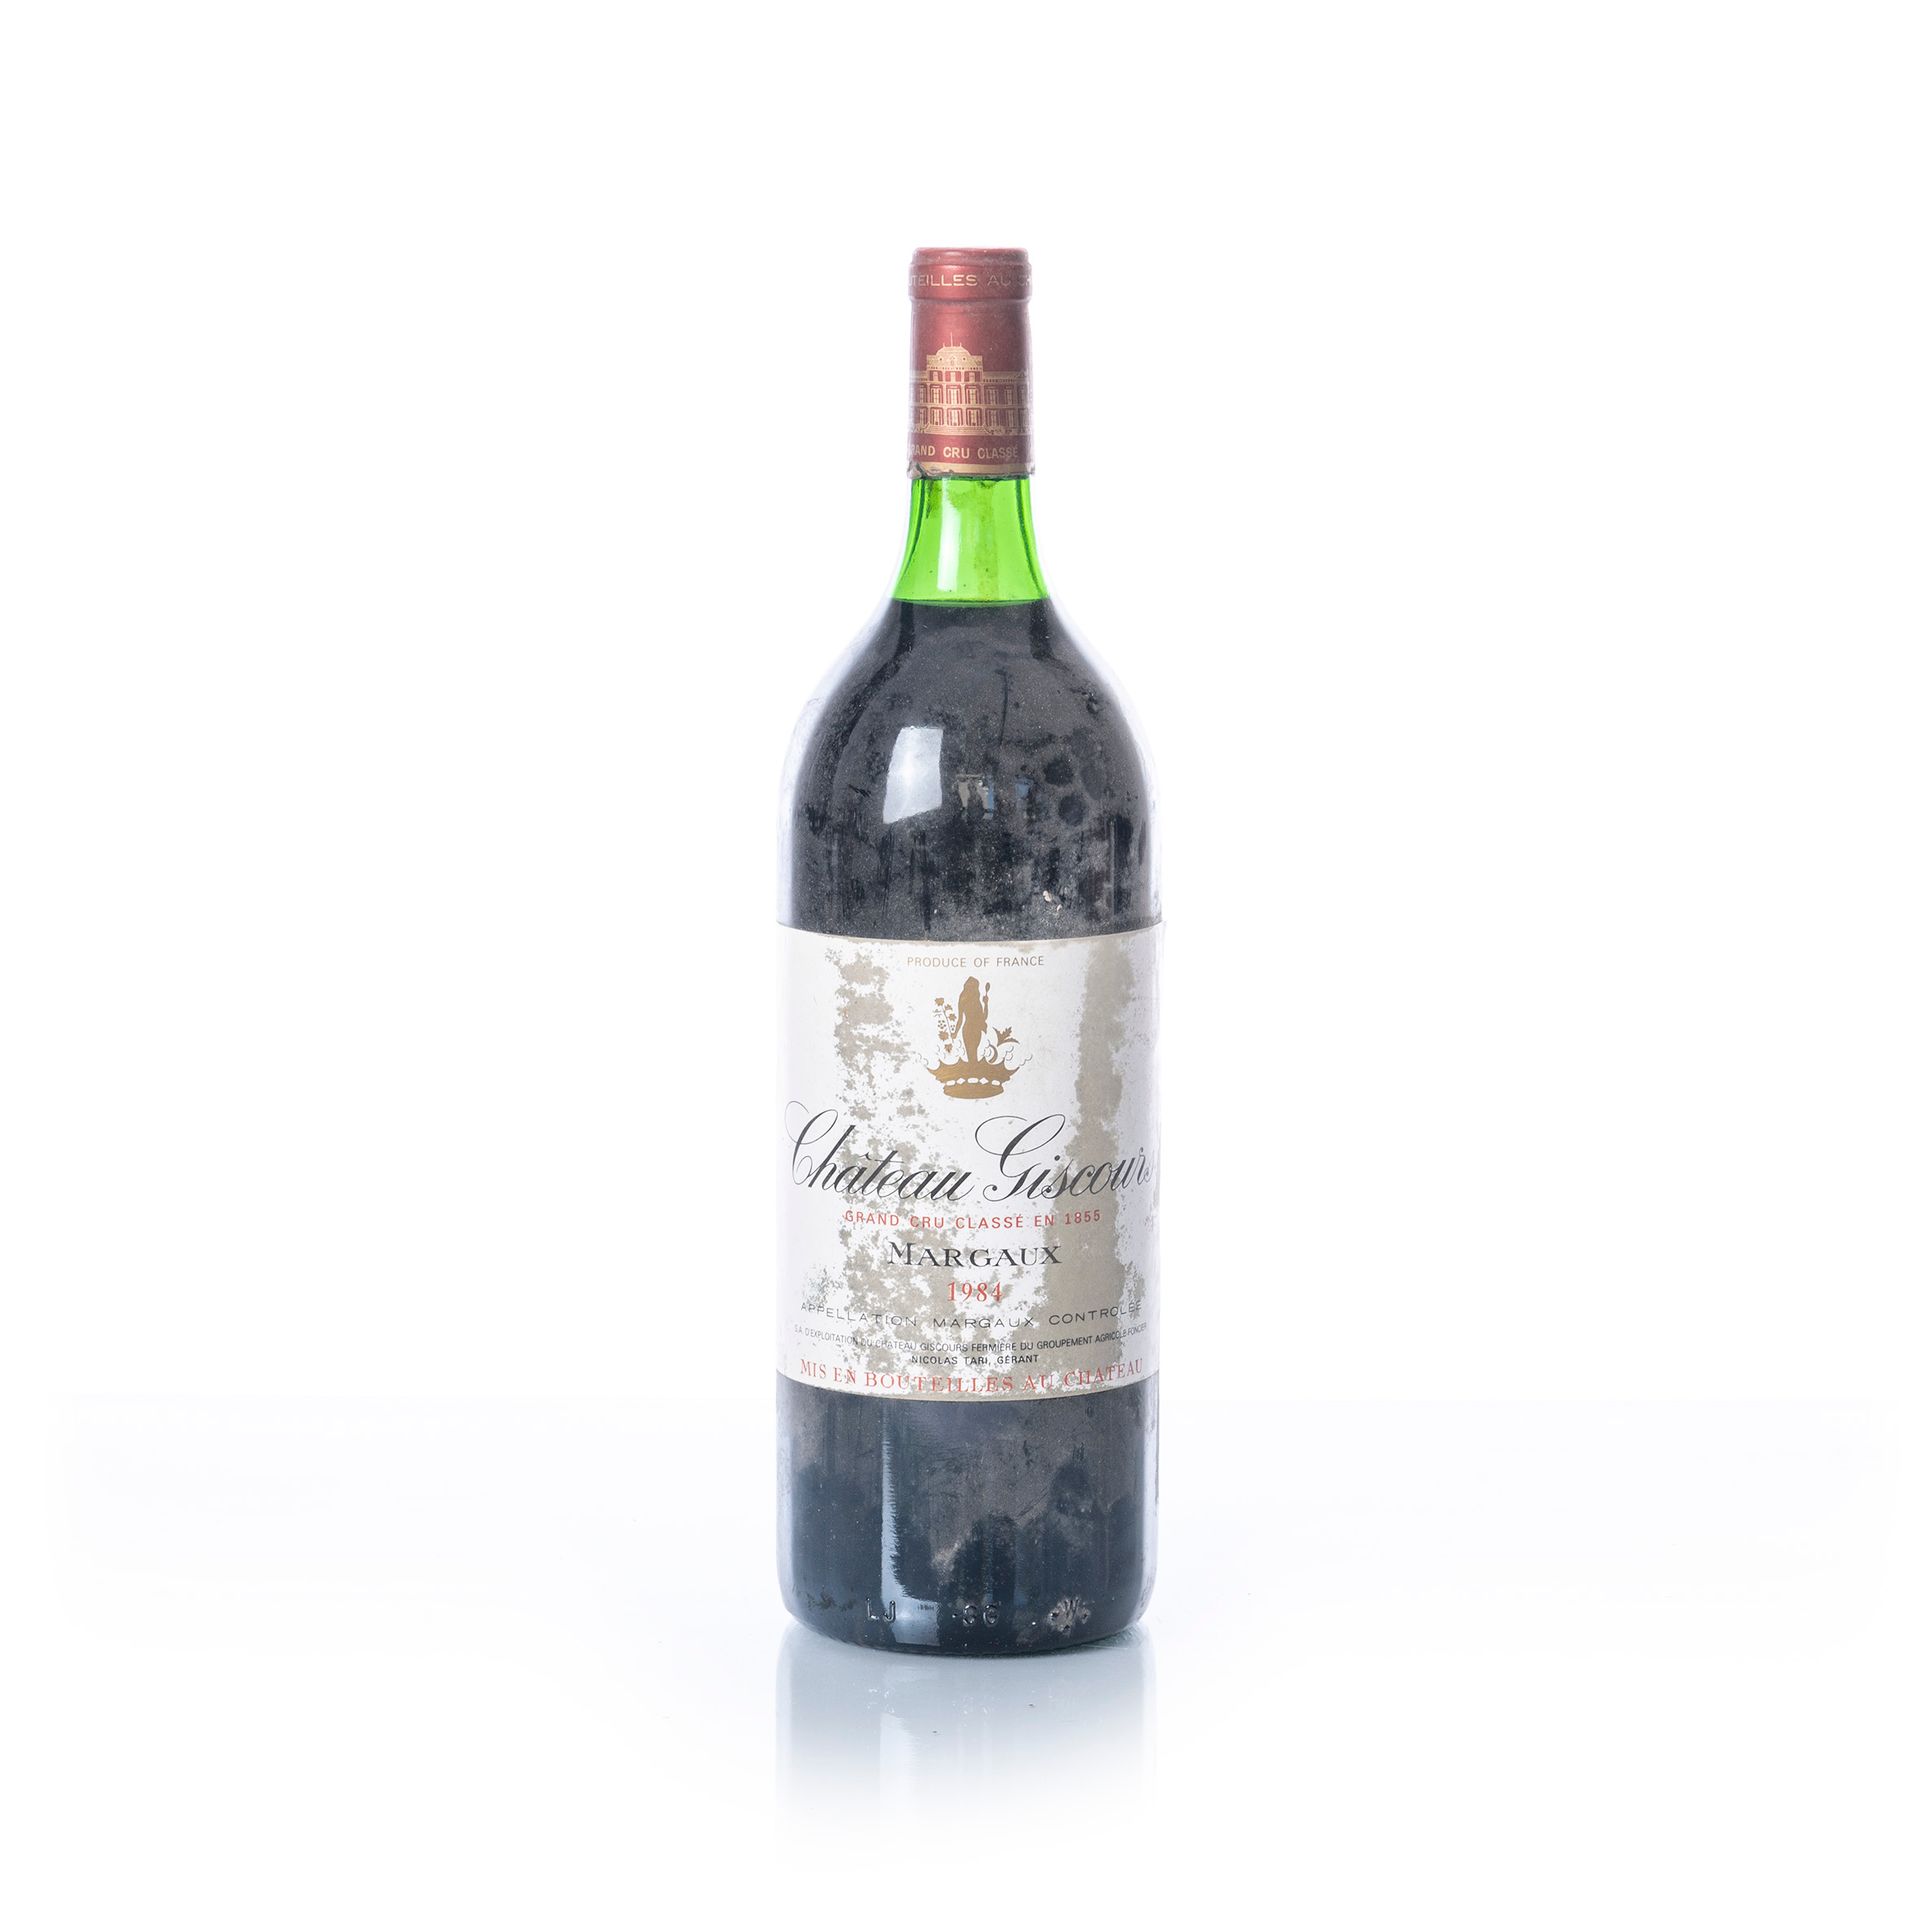 Null 1大杯吉士古堡葡萄酒

年份：1984年

产区：GCC3 MARGAUX

备注 : (B.G; E.T; C.A)